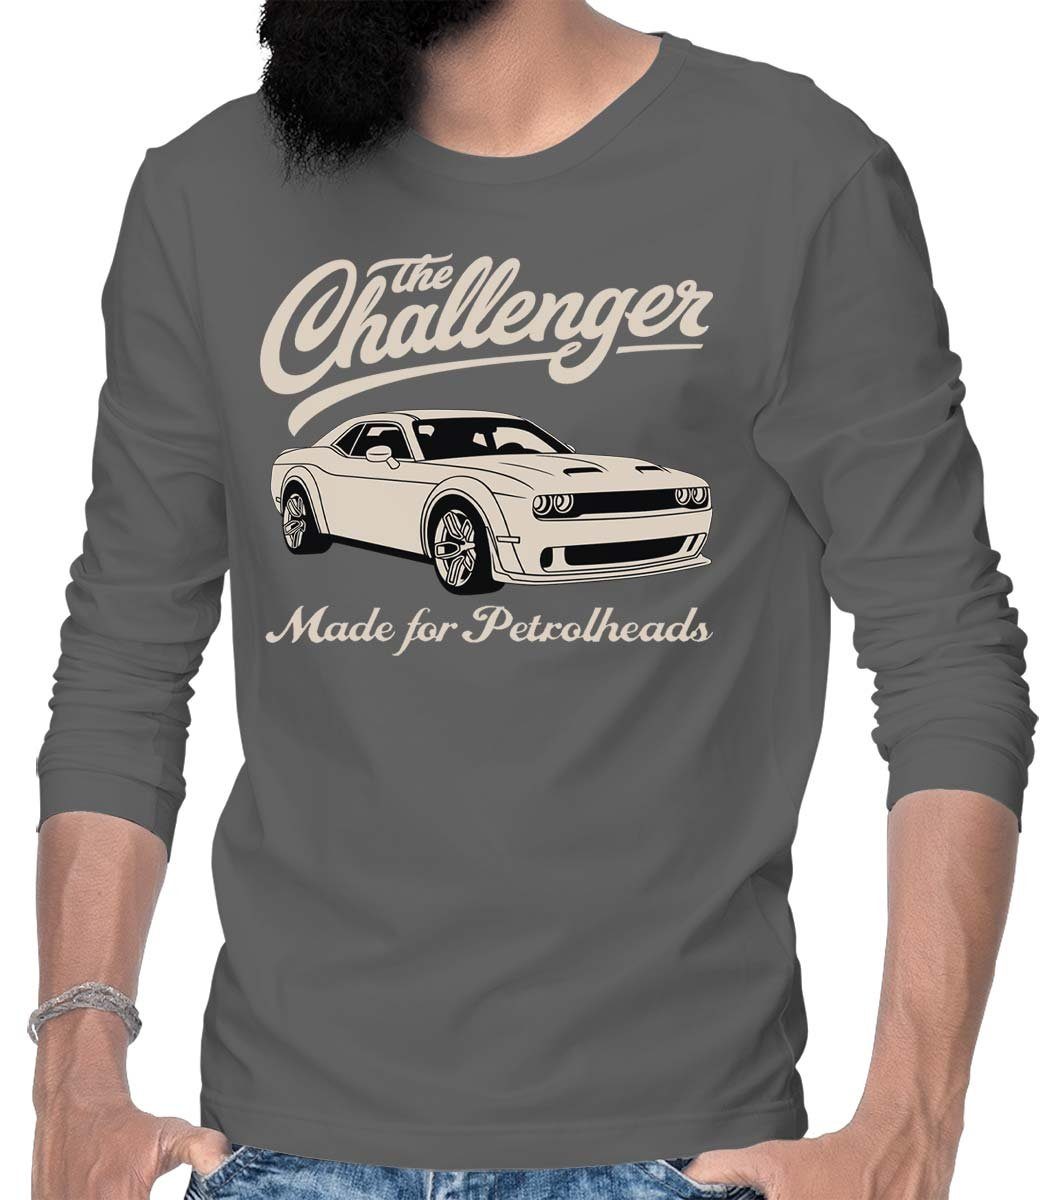 Challenger Herren Motiv Auto / US-Car On Grau T-Shirt Langarm mit Wheels Longsleeve Rebel The